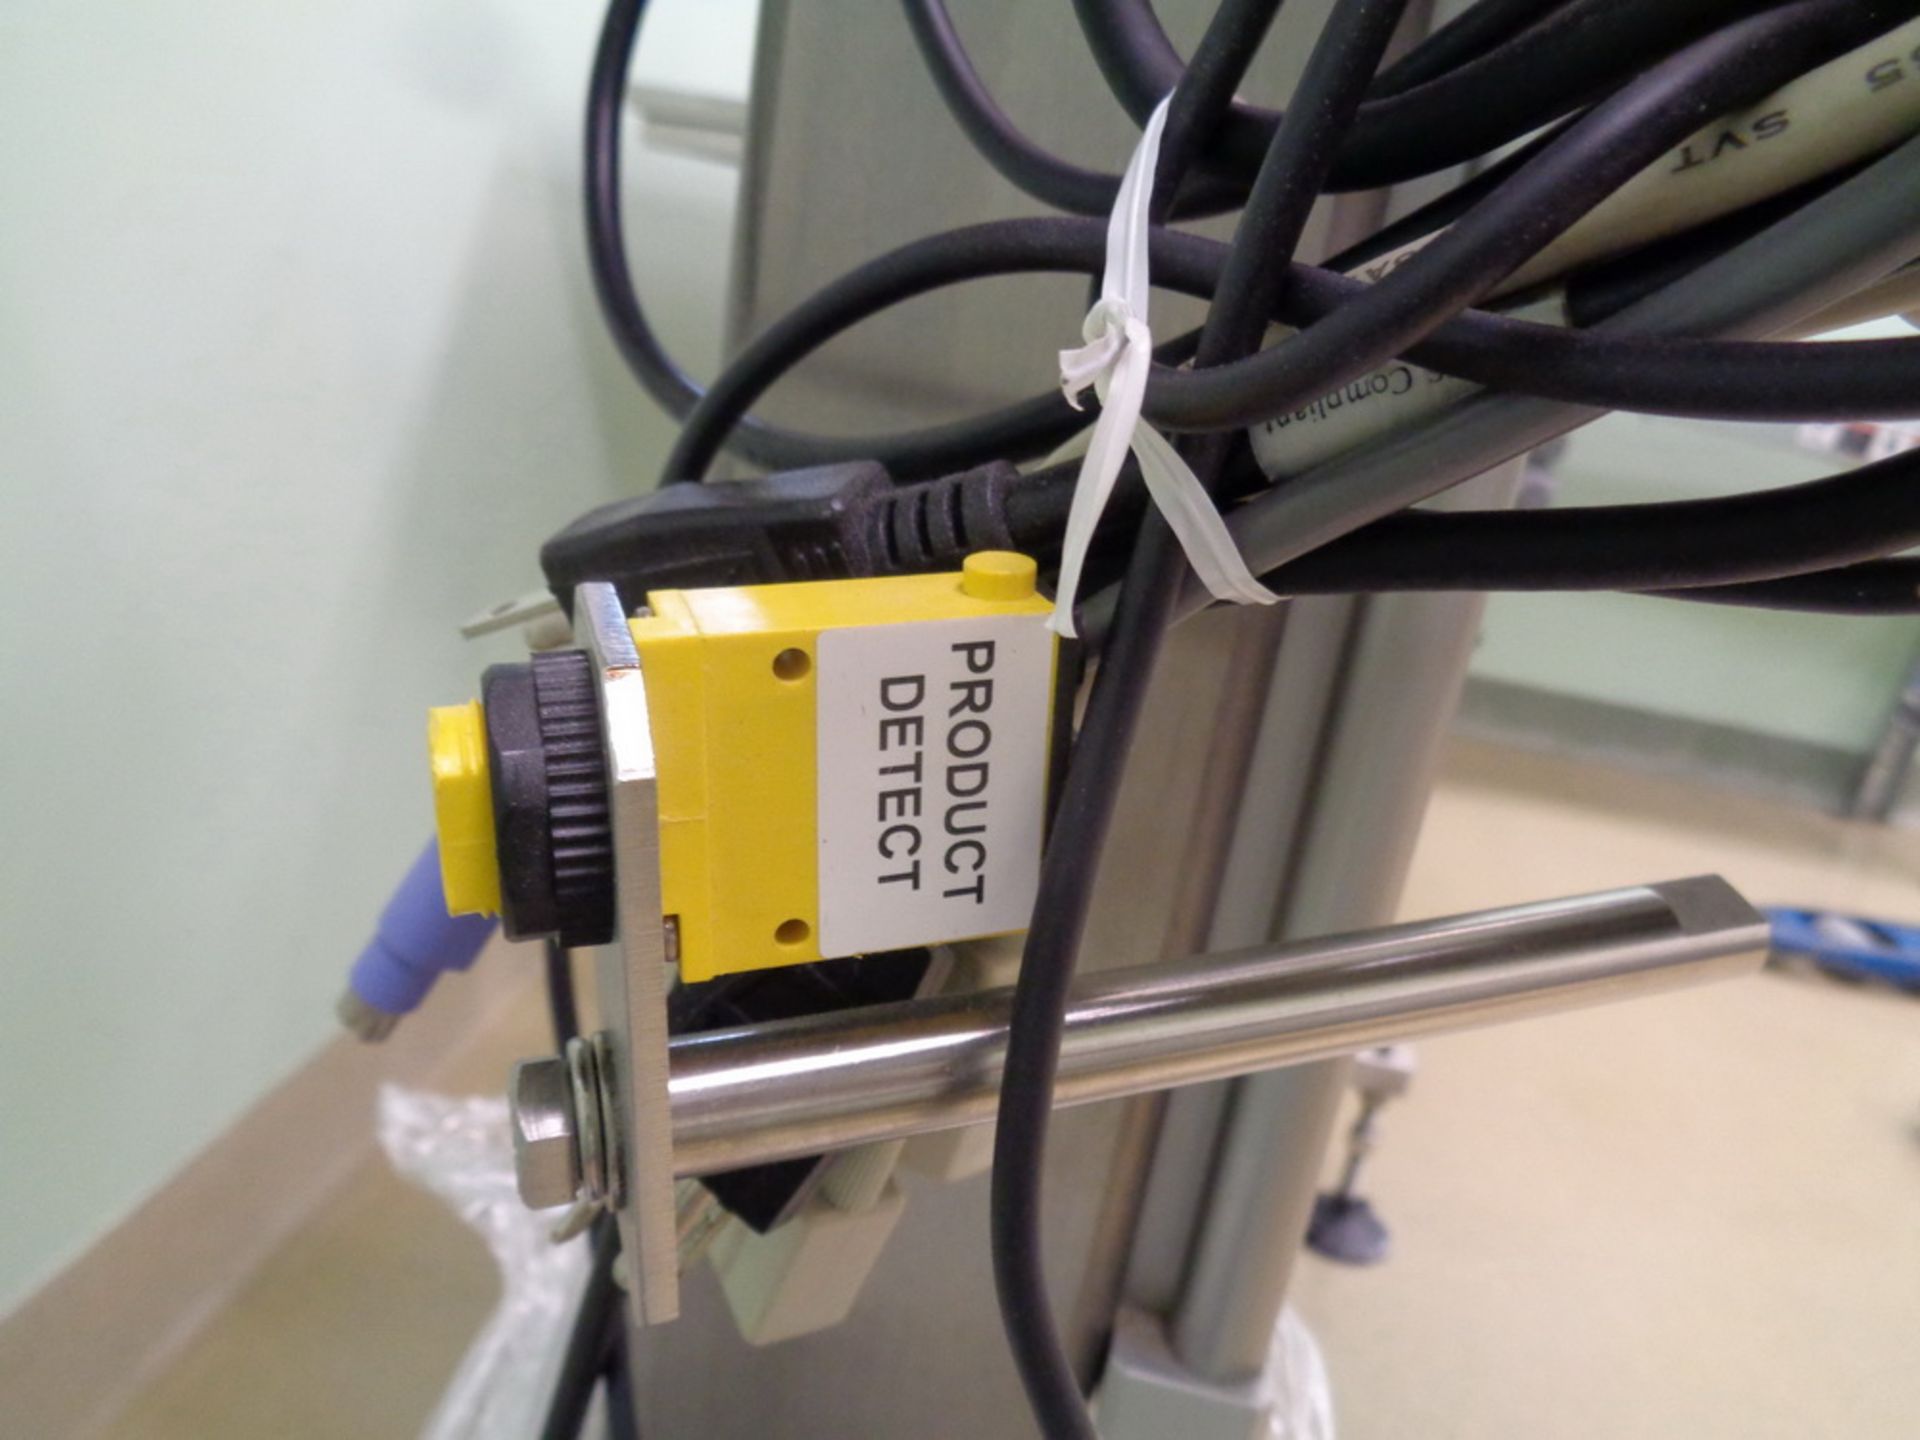 Quadrel Print and Apply Pressure Sensitive Carton Labeler, Model Q31-LS8490, S/N 57957-01 - Image 8 of 10